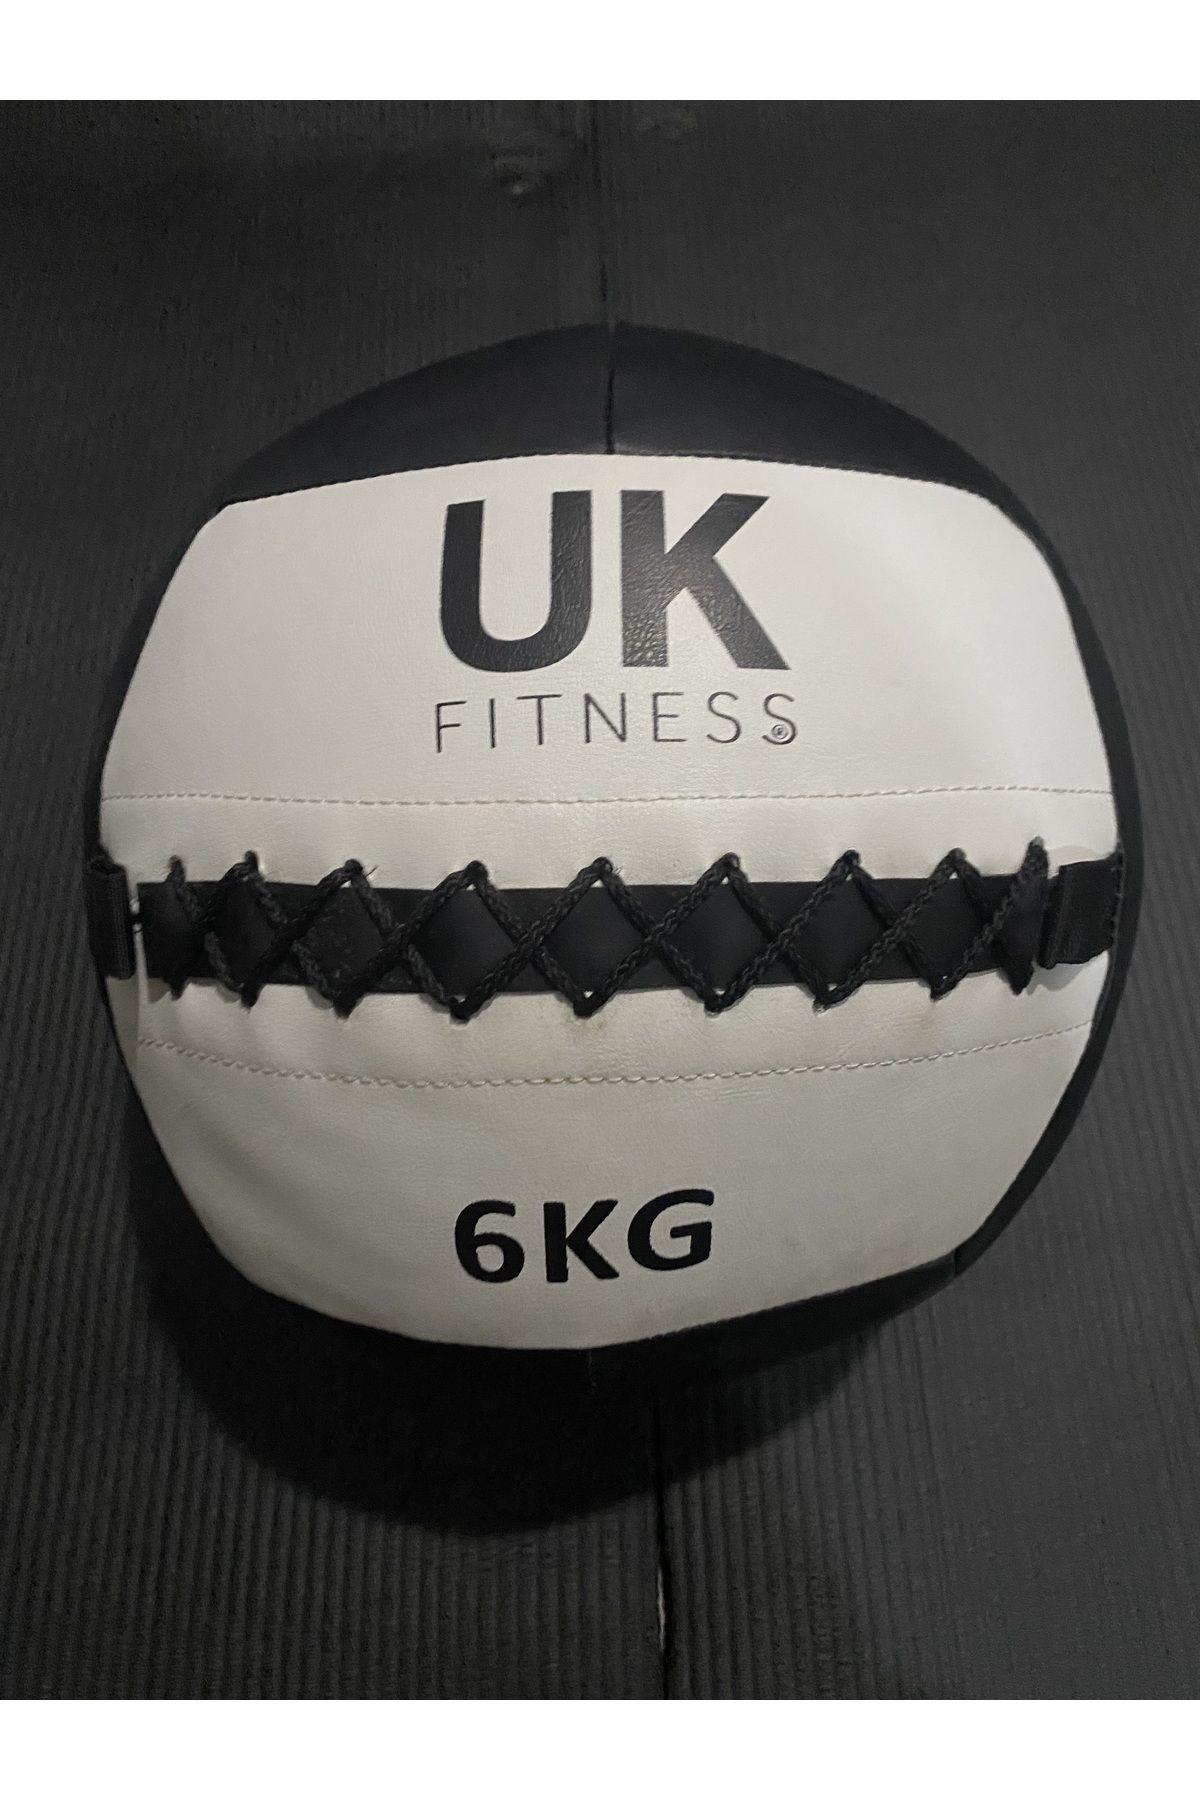 UK FİTNESS Uk Fitness Crossfit Gym Deri Sağlık Topu 6 Kg Pro.